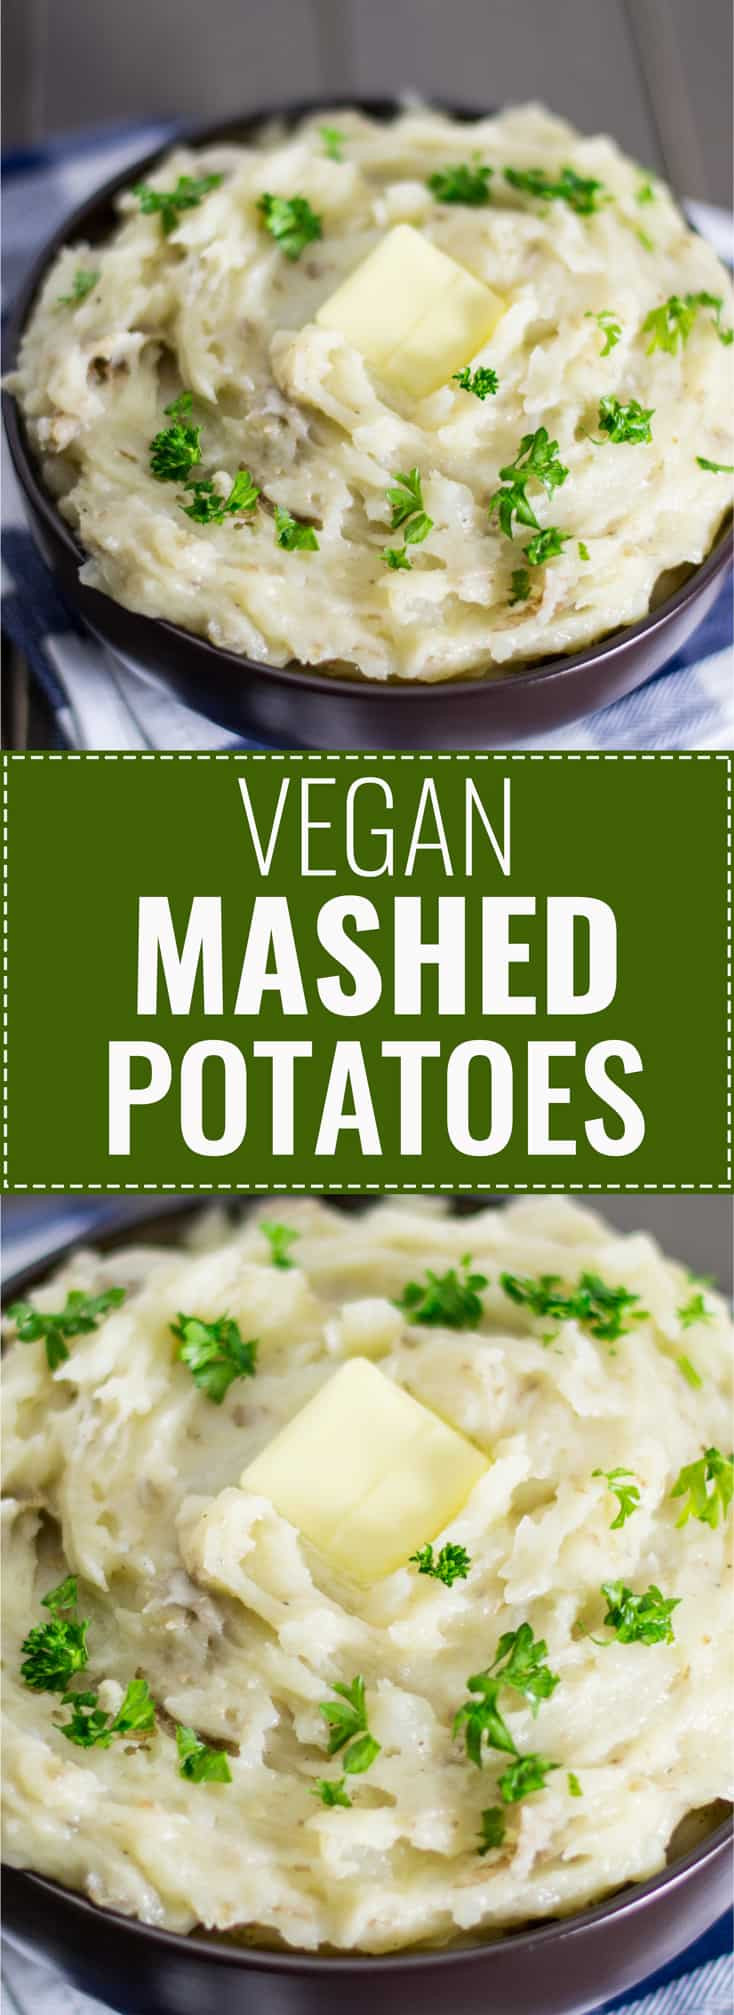 Vegan Mashed Potatoes Recipes
 Vegan Mashed Potatoes Recipe dairy free and delicious